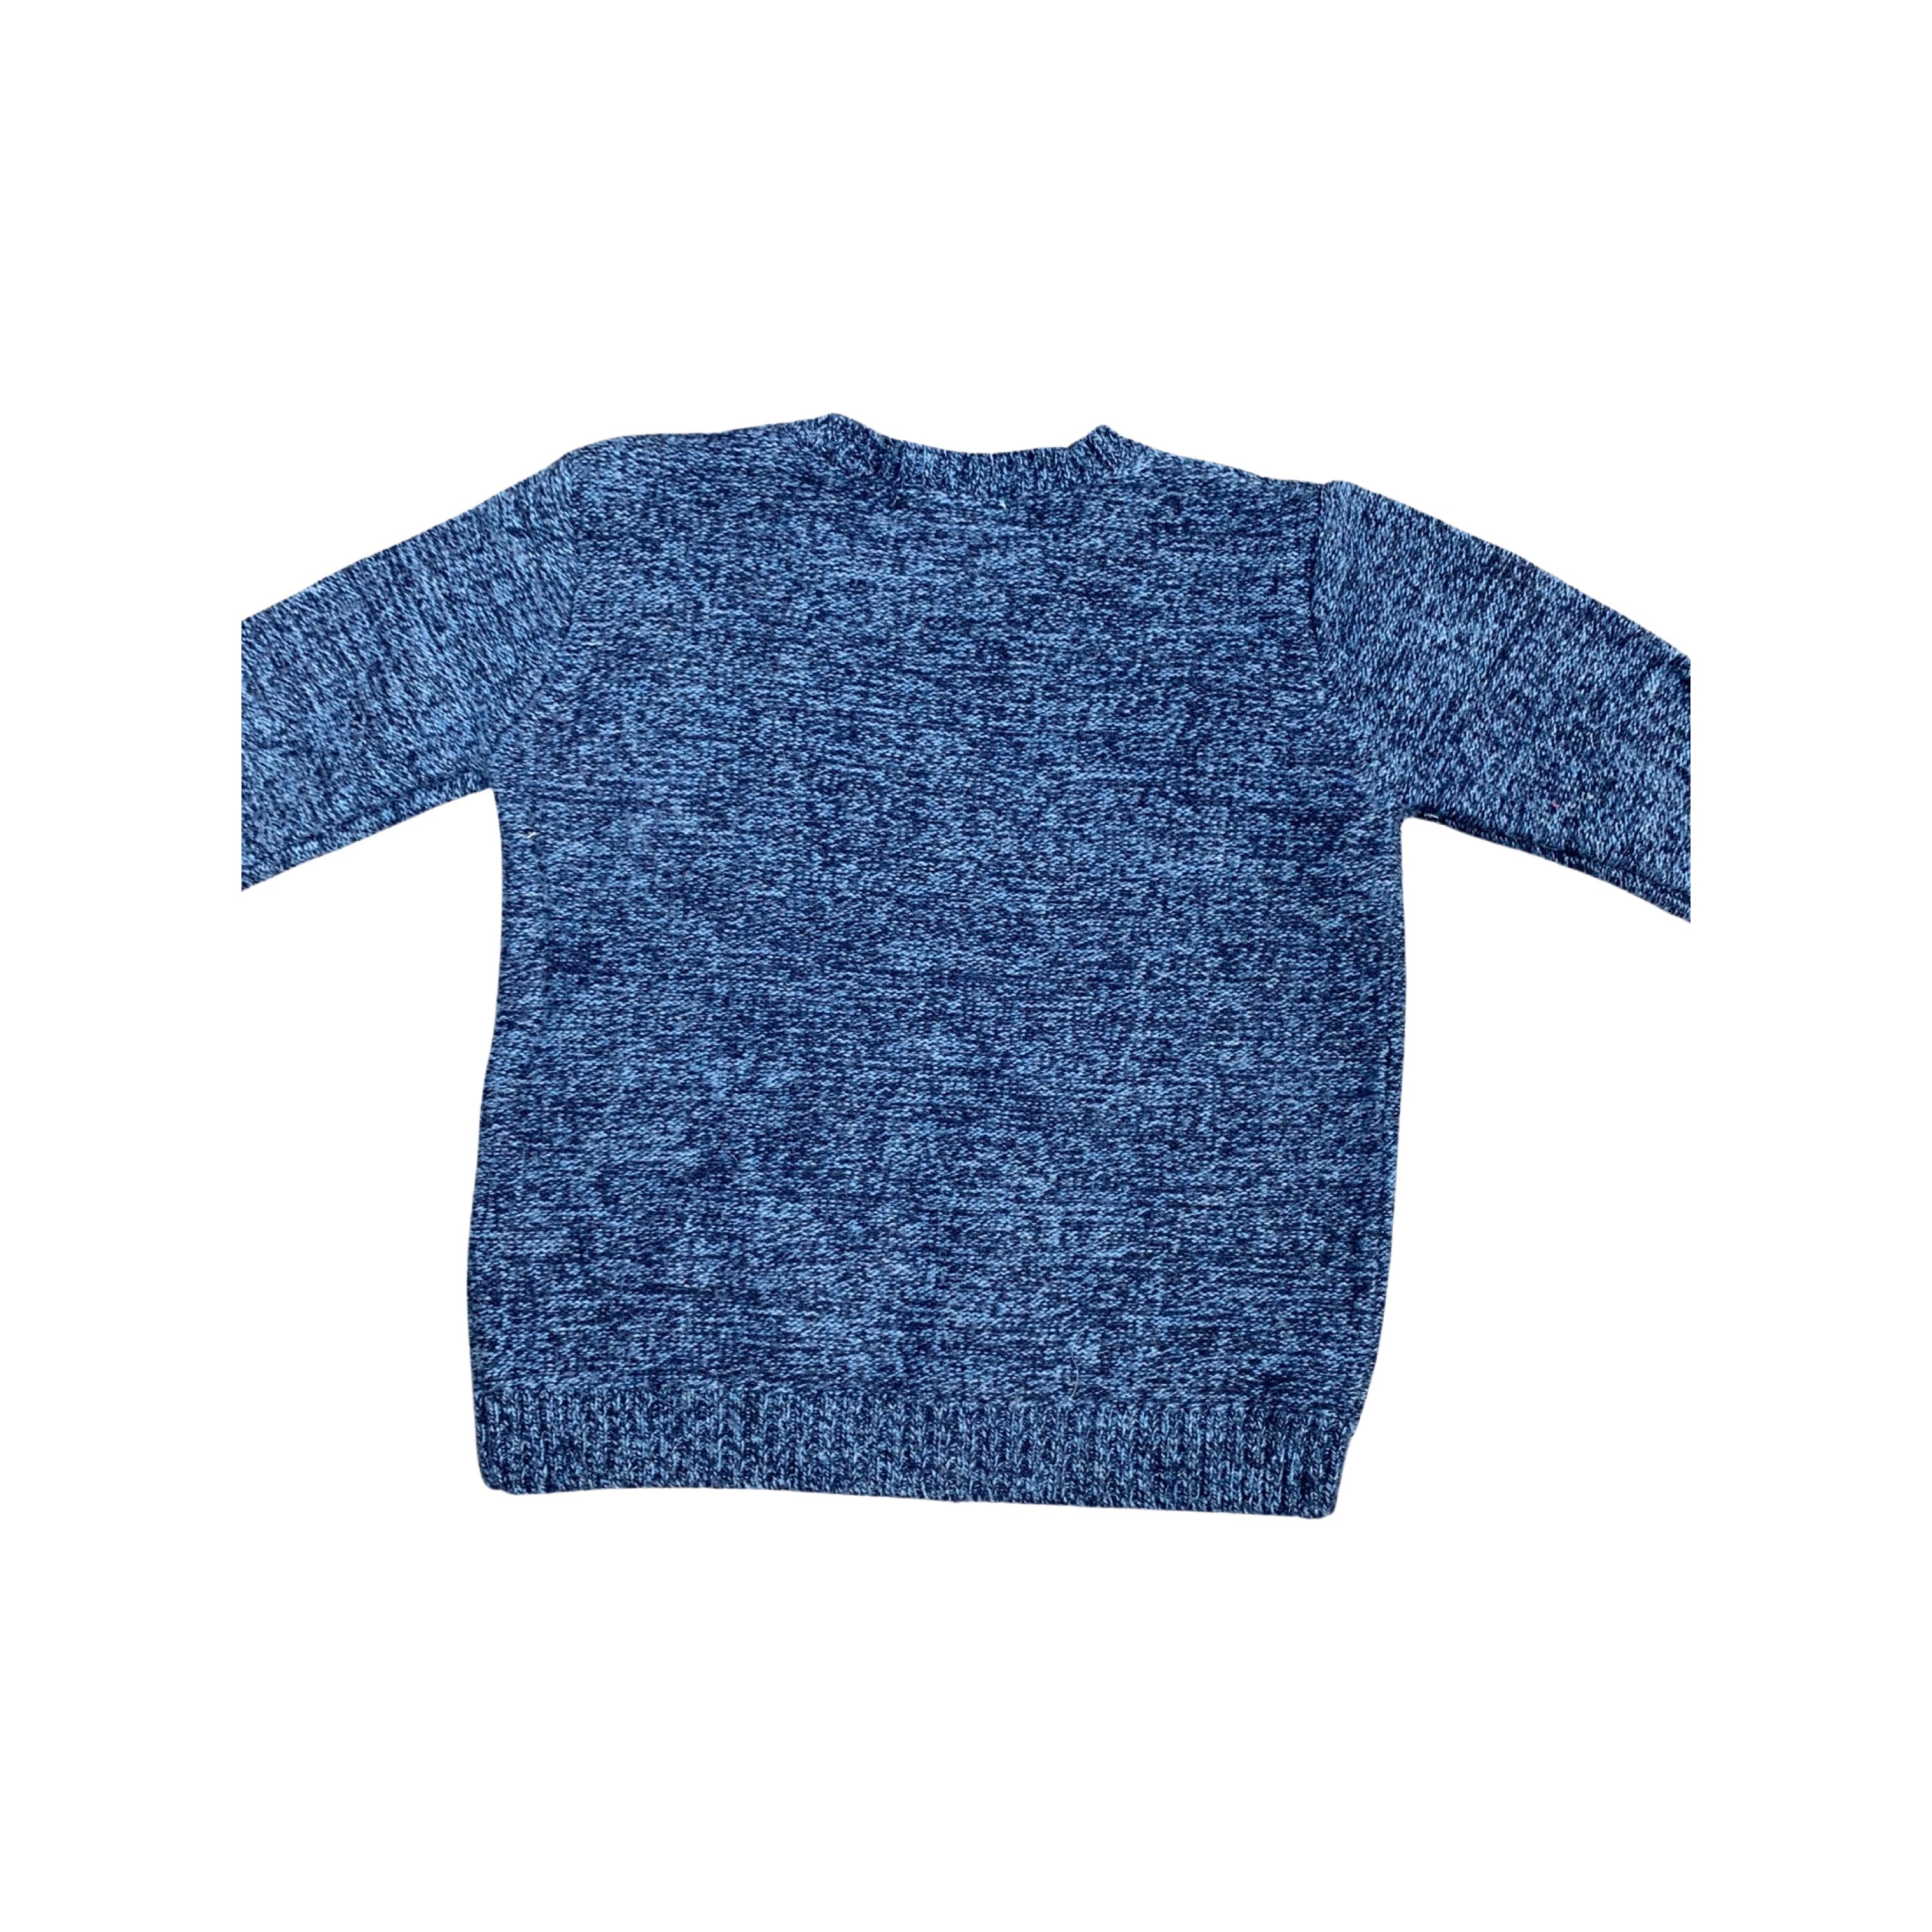 La Redoute 'Hi Boy' Embroidered Knit Jumper Baby Boy 9-12 Months/74cm